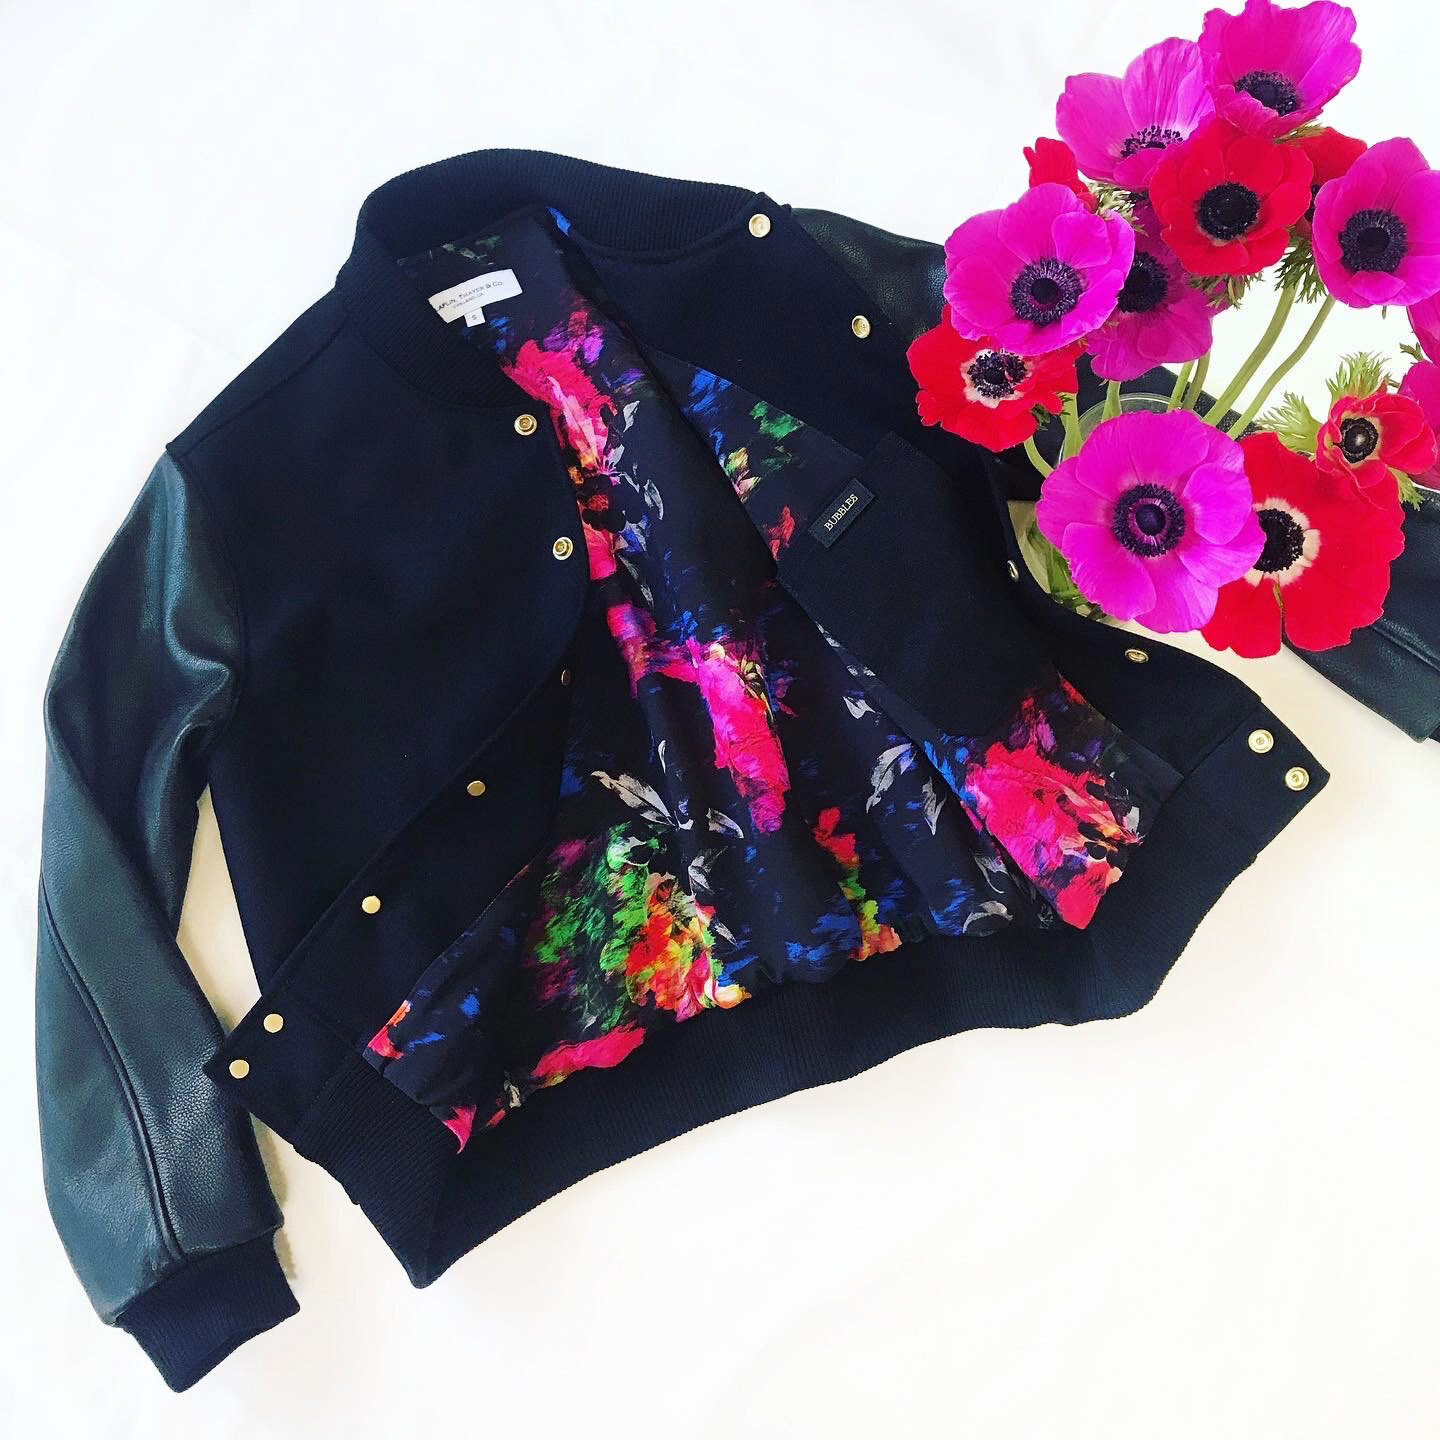  Black wool body, black leather sleeves, floral lining 